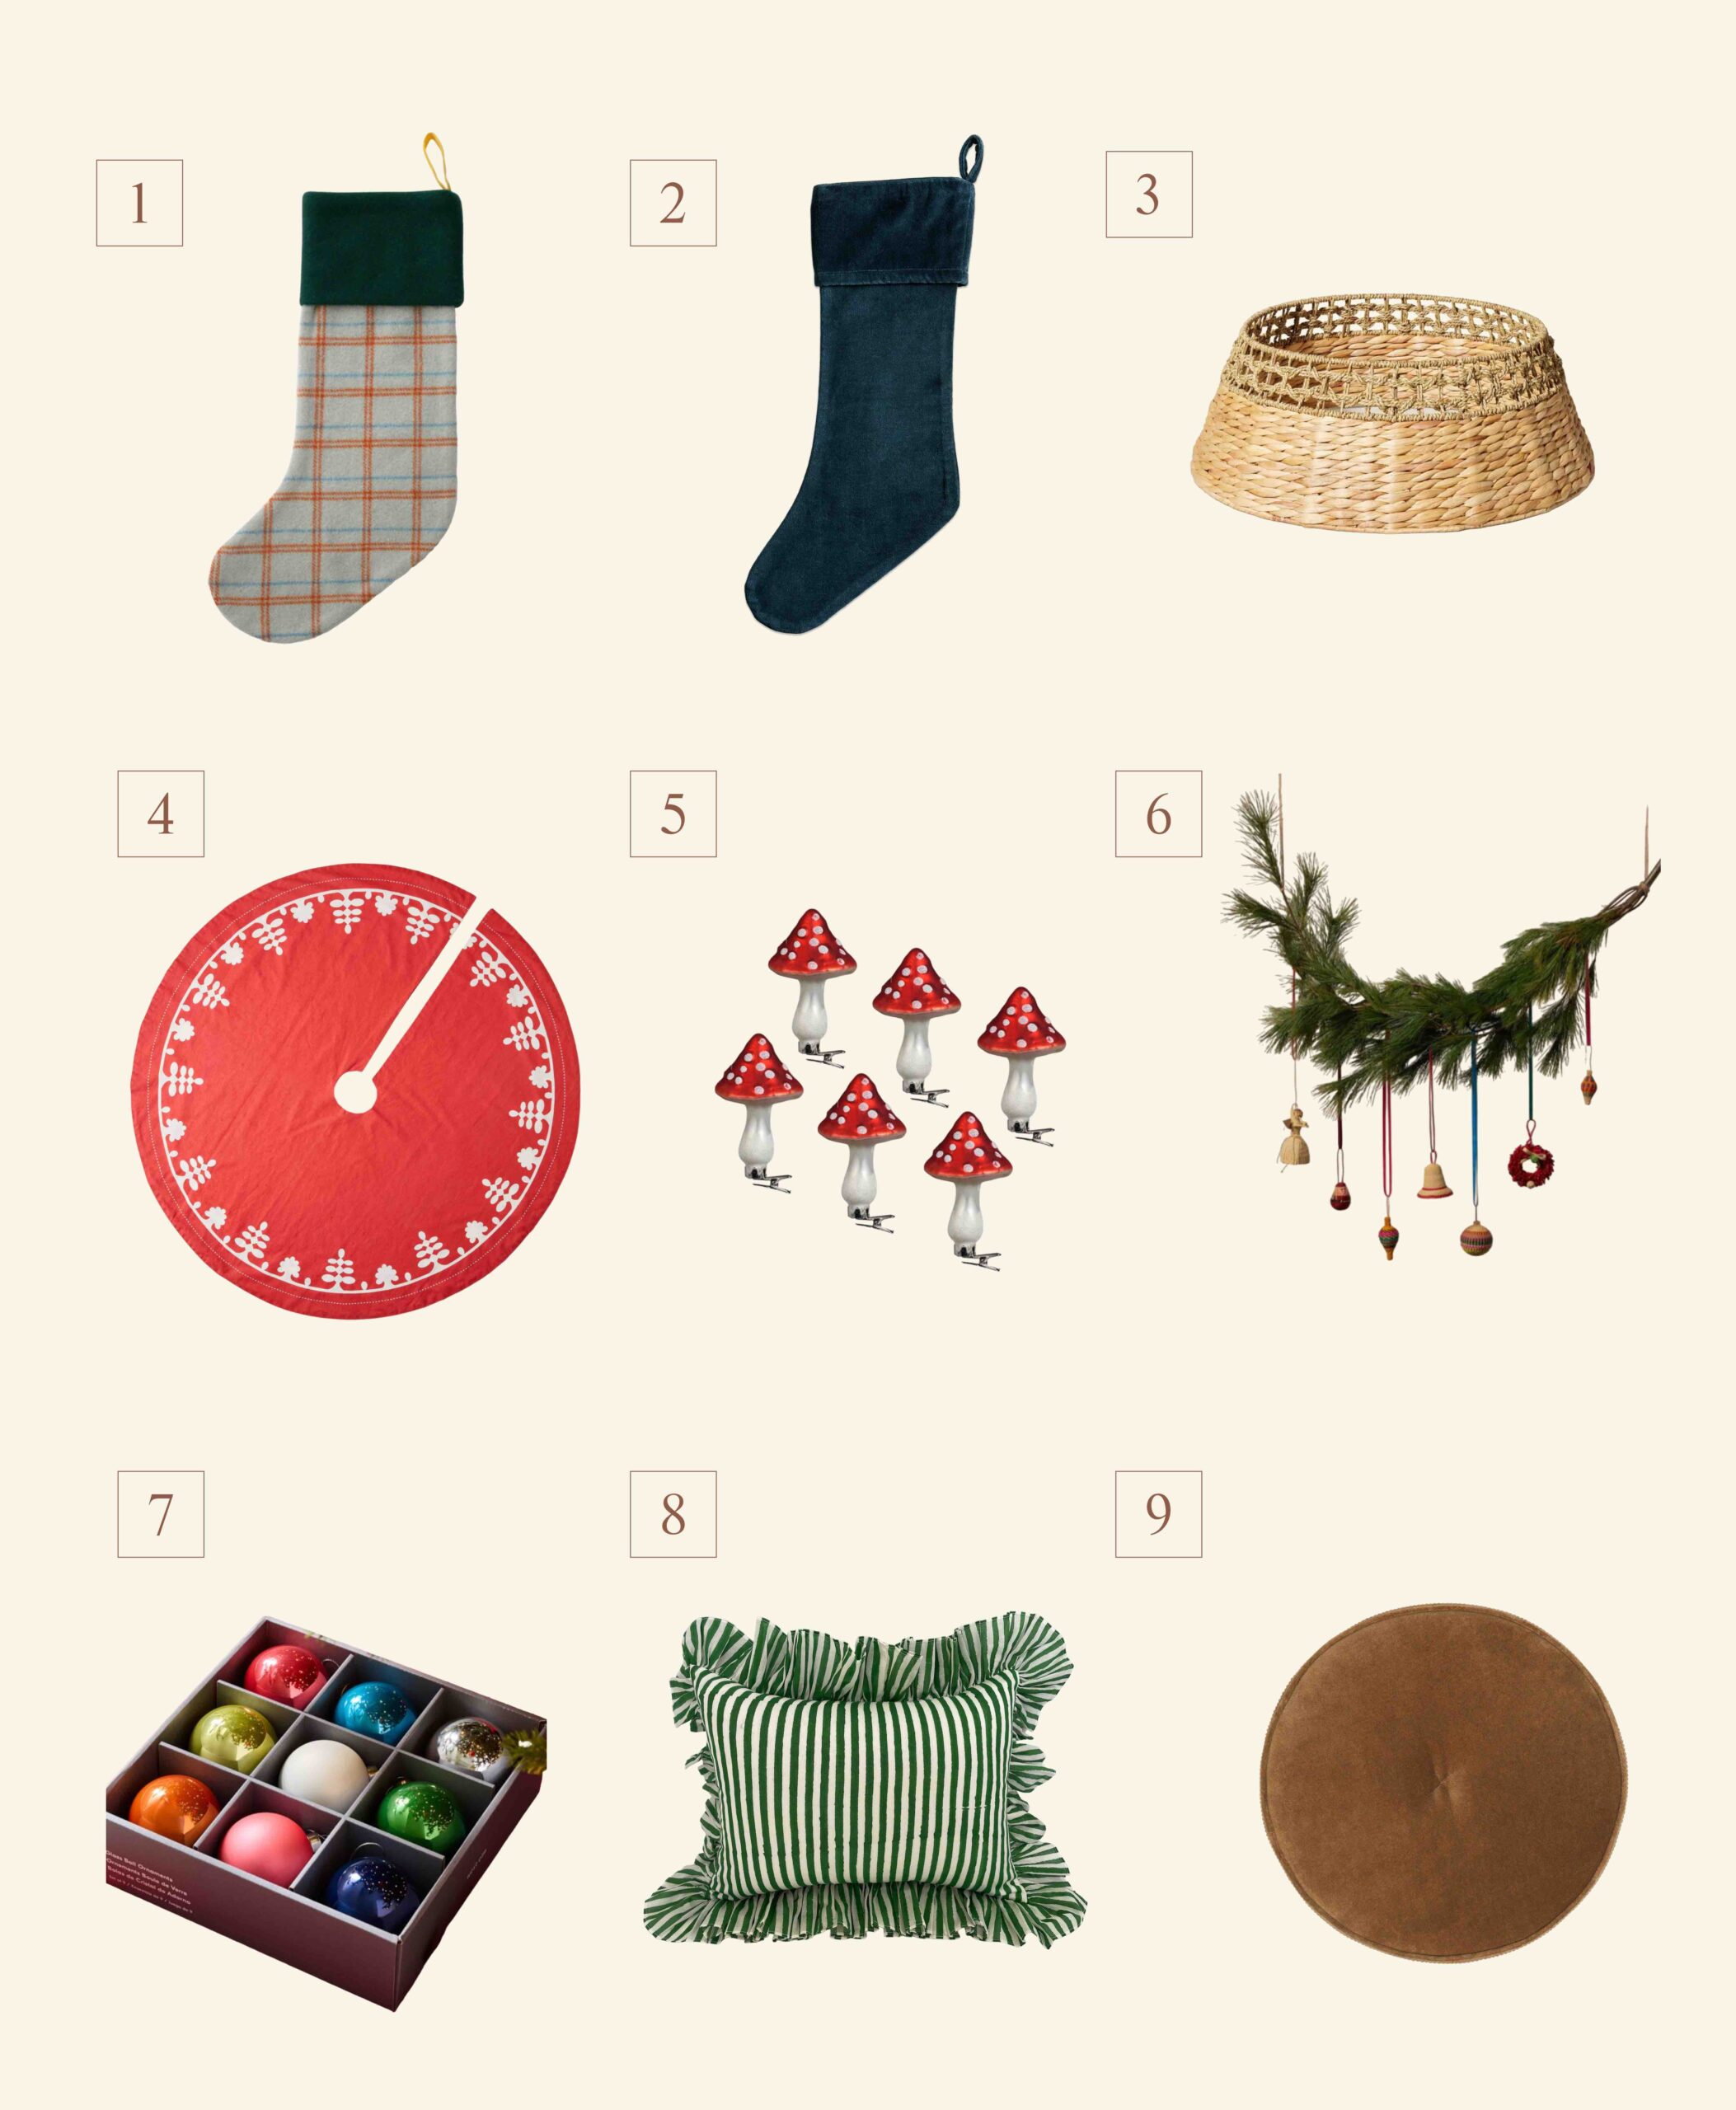 2023 holiday decor: stockings, tree skirts, ornament sets, decorative pillows